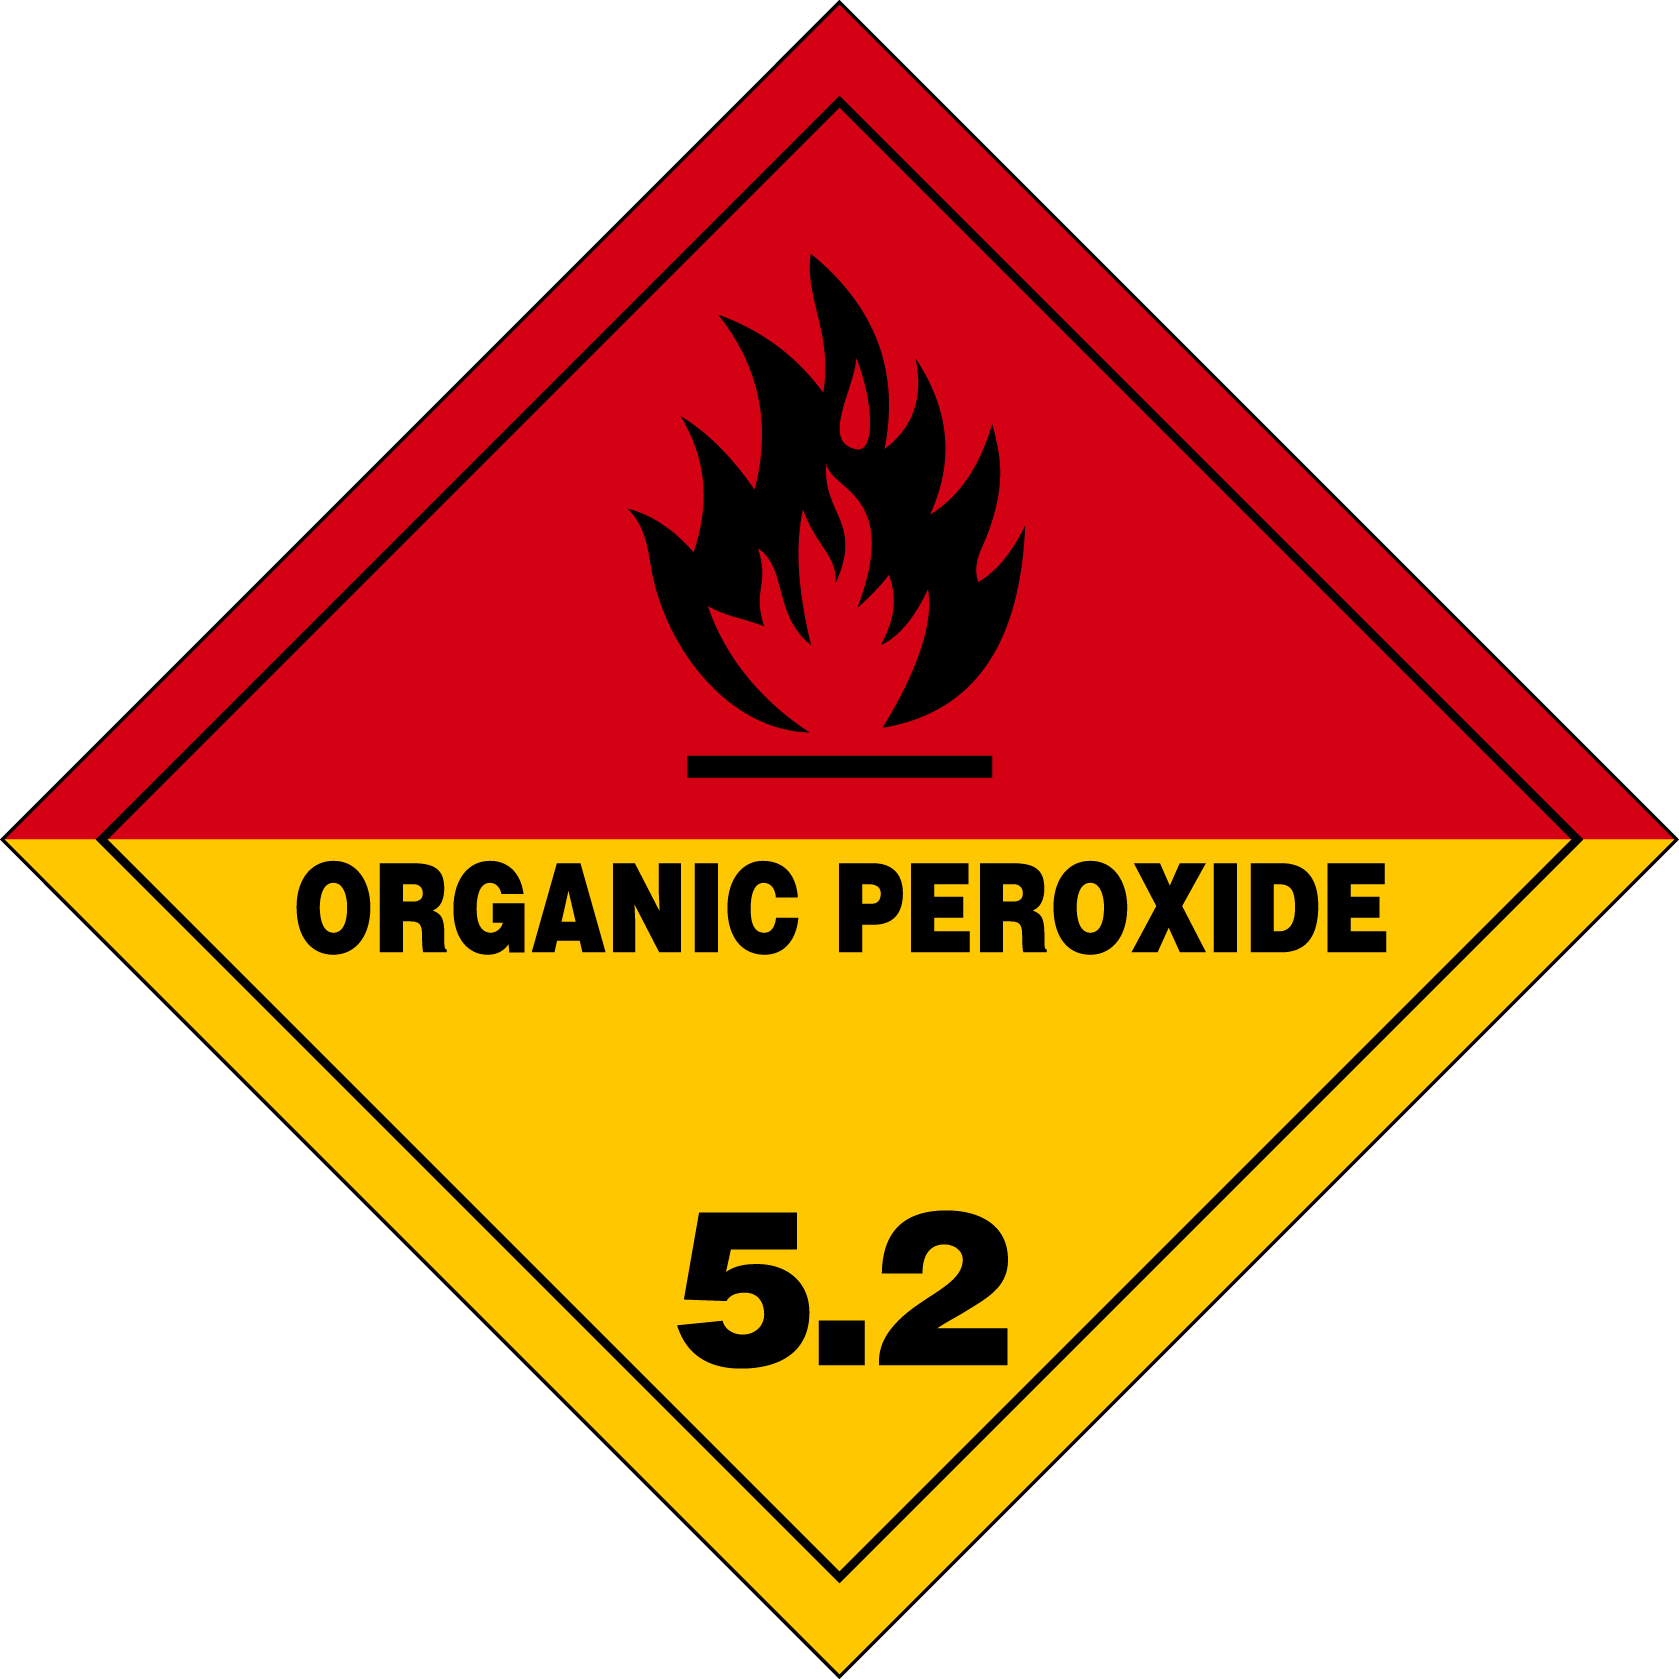 Organic Peroxide - Oxidizing Substances And Organic Peroxides (1679x1679)